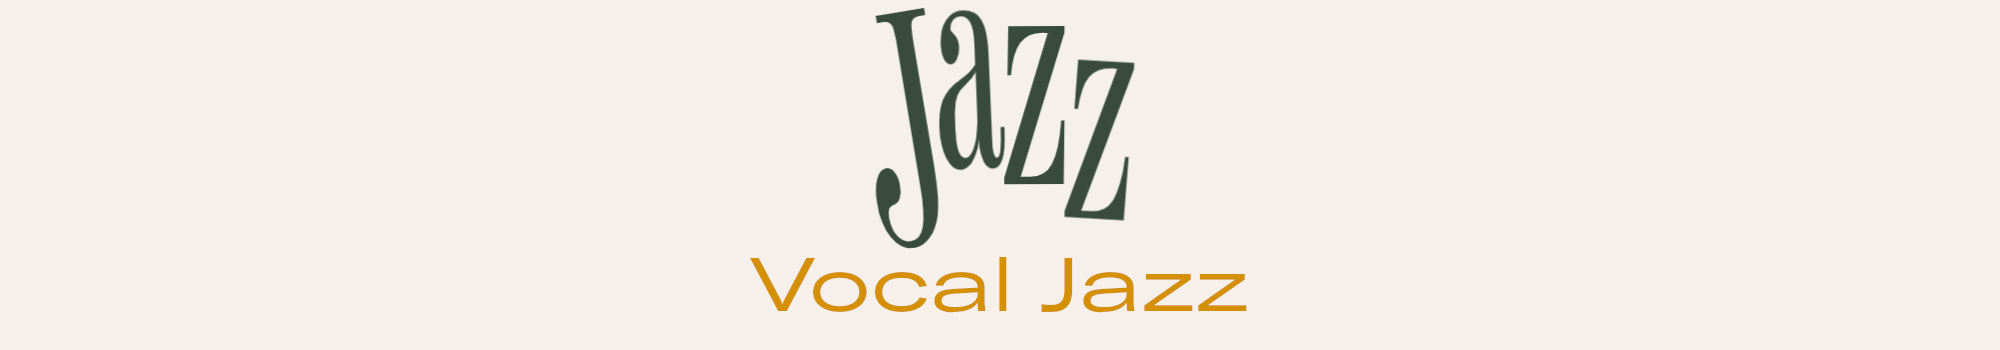 Rubrik till kategori: Jazz - Vocal Jazz